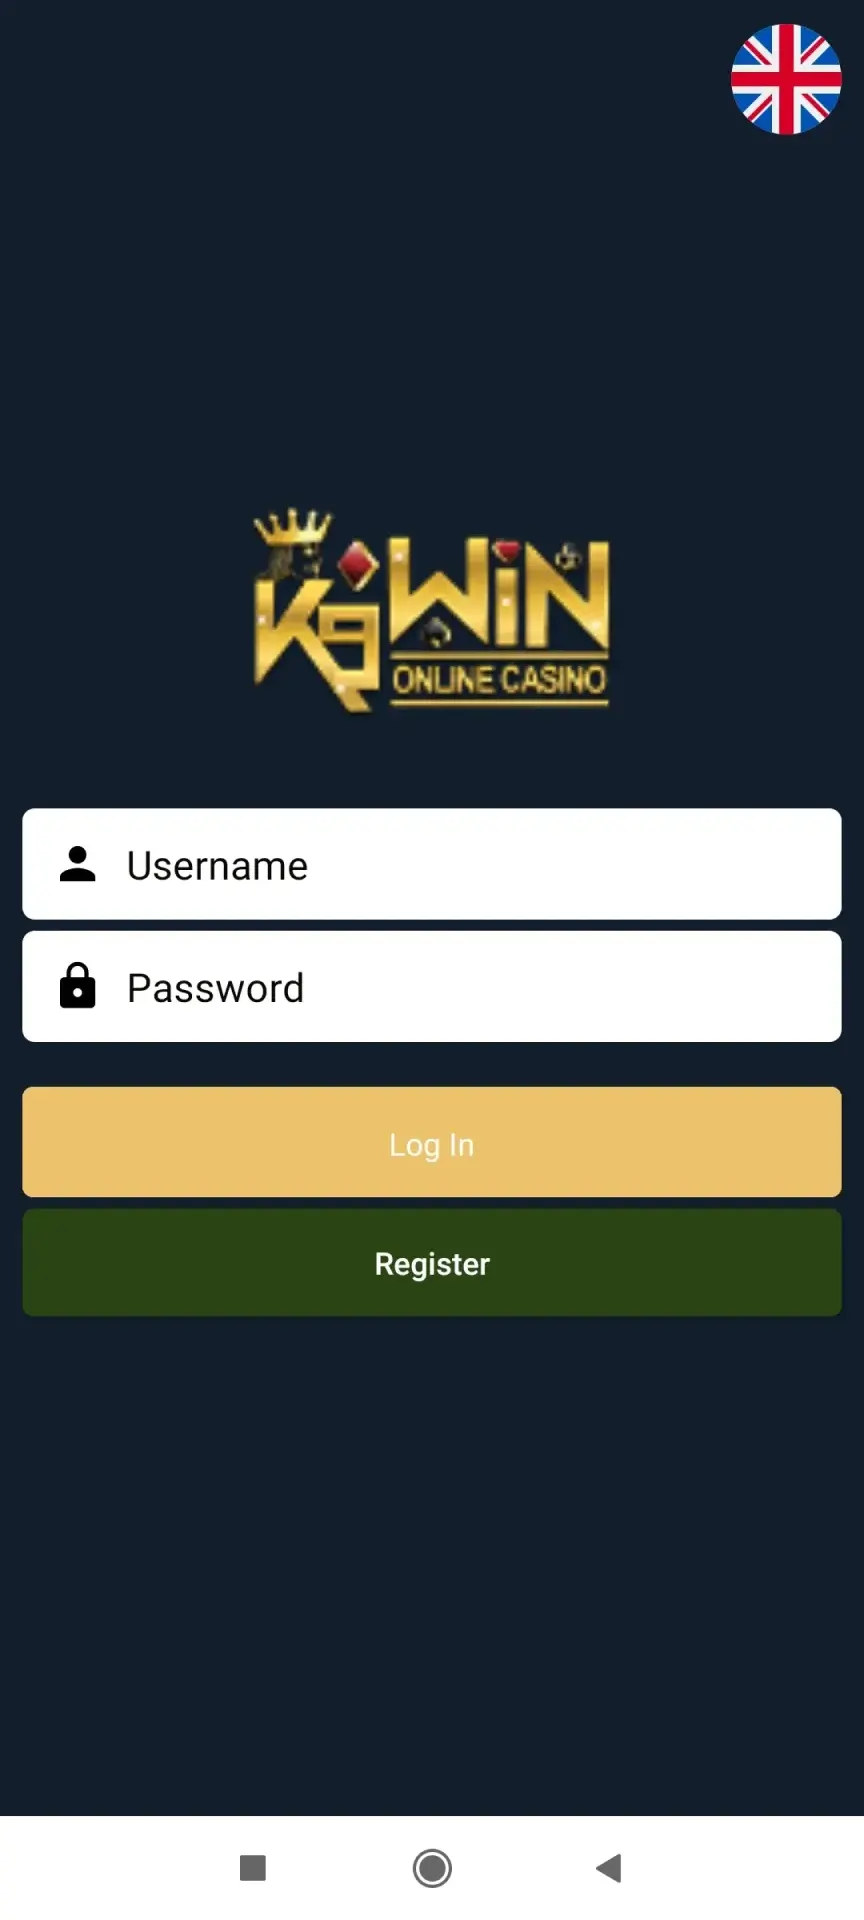 Create a new K9Win account.